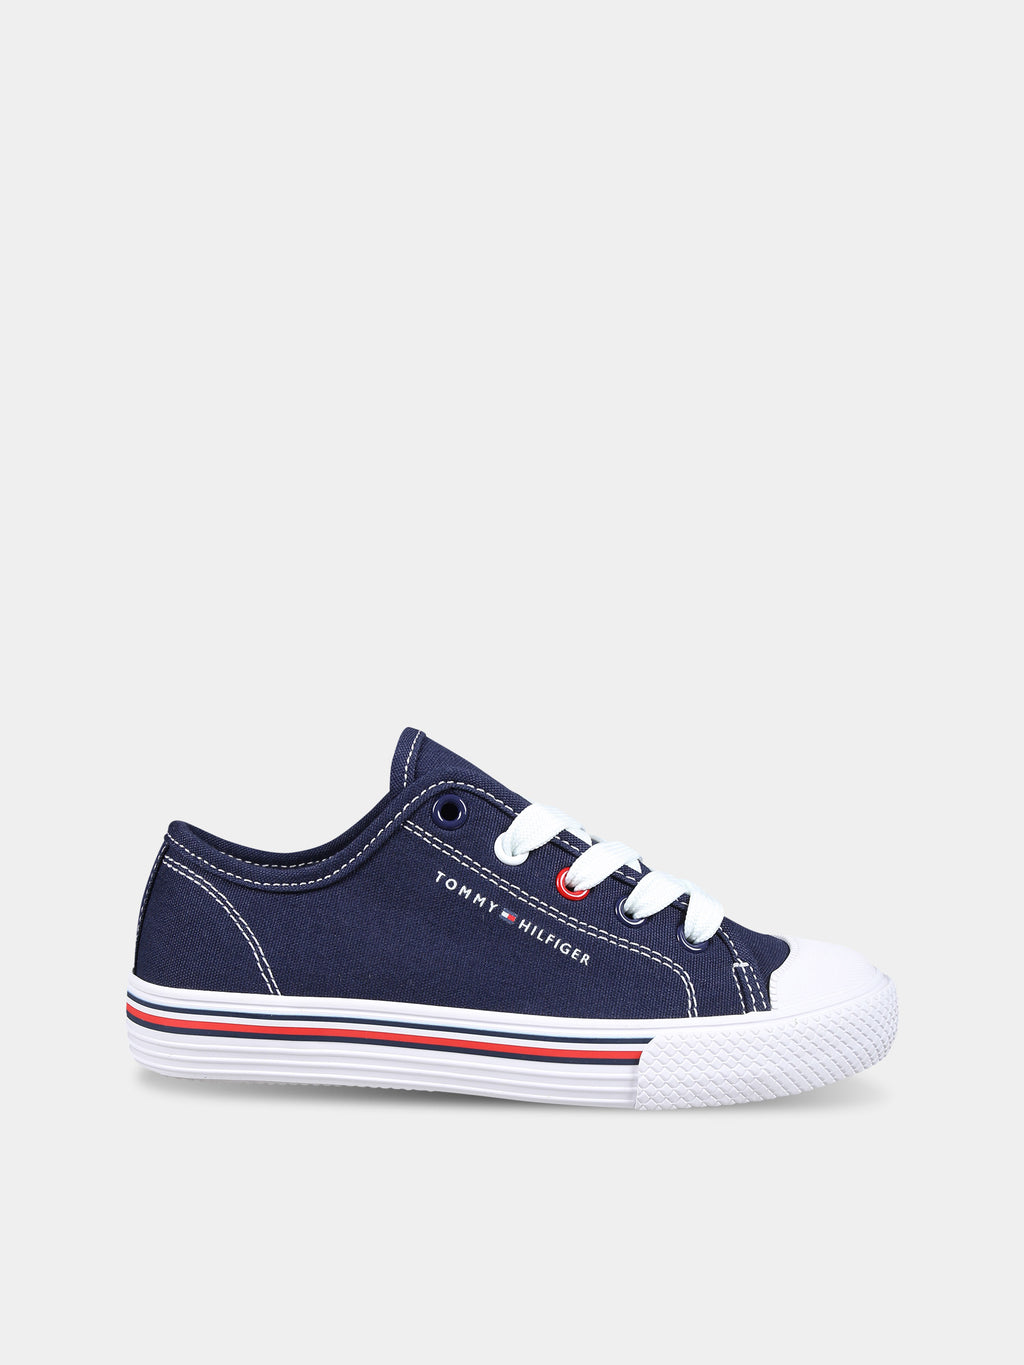 Sneakers blu per bambini con logo